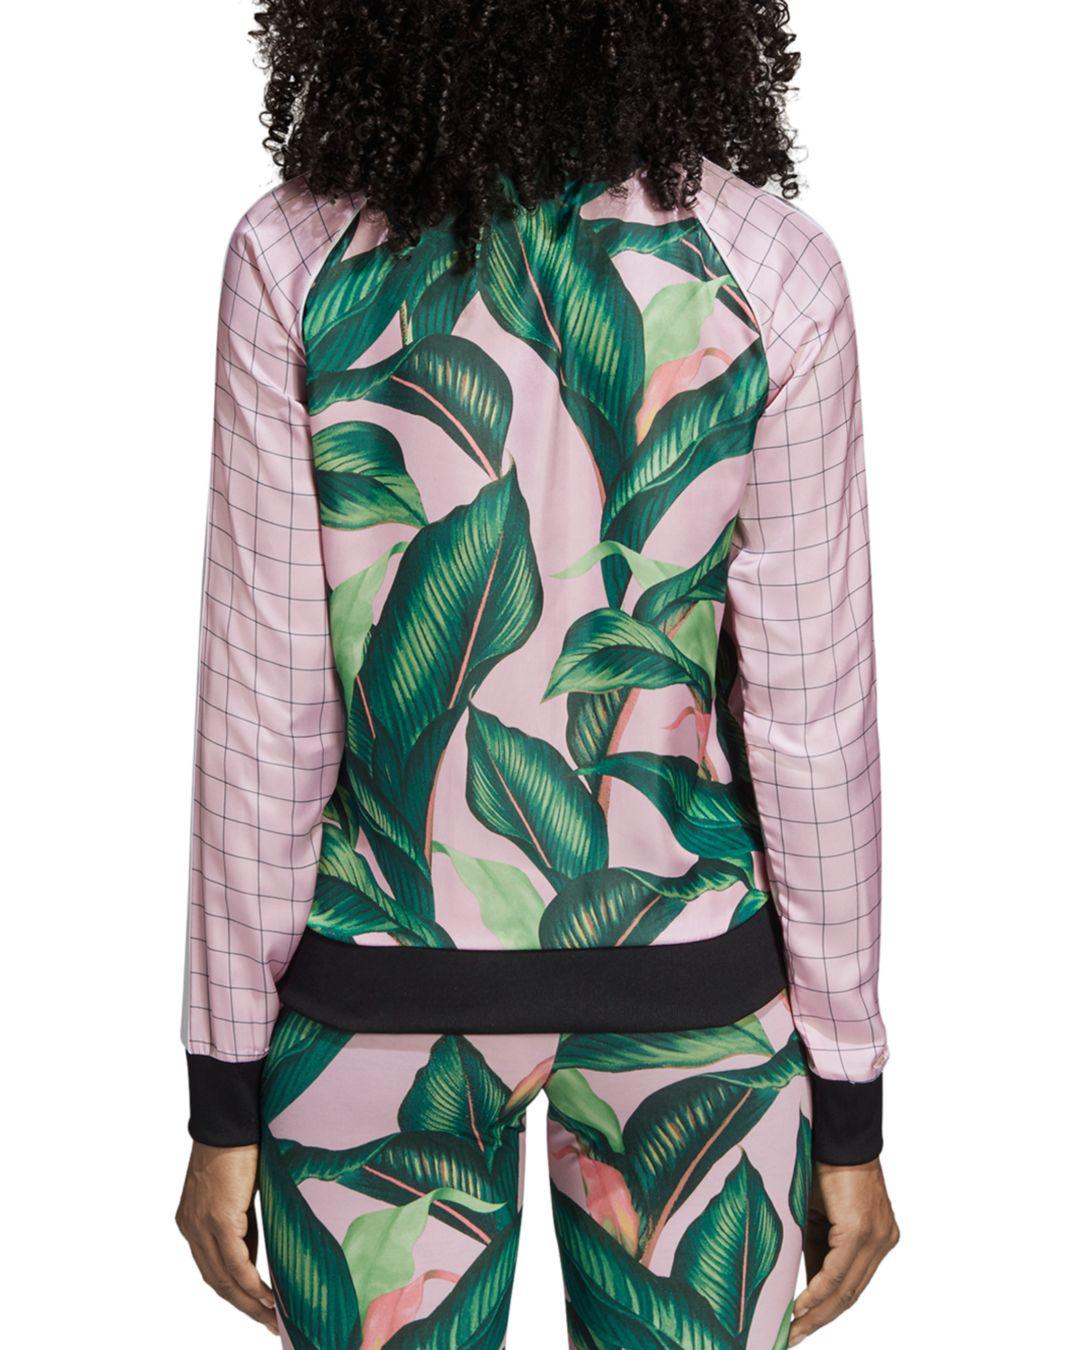 adidas palm leaf pink & green track jacket